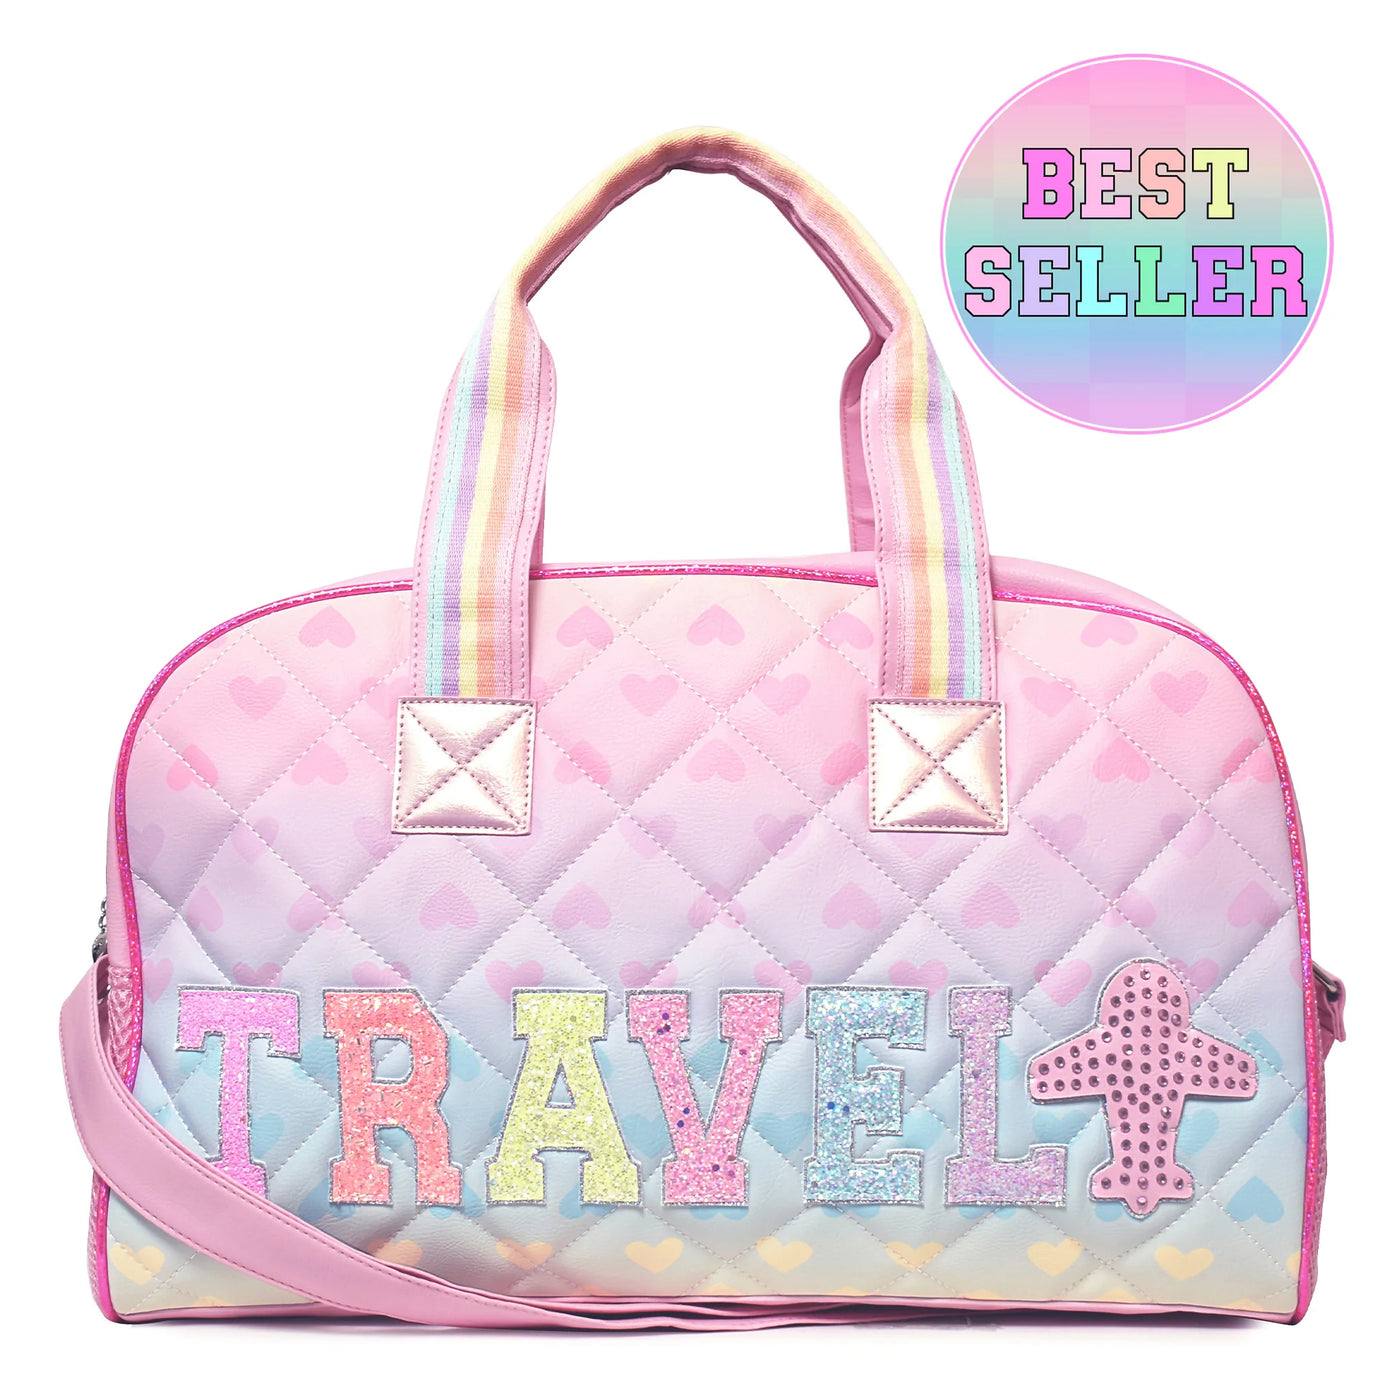 Travel Large Duffle Bag